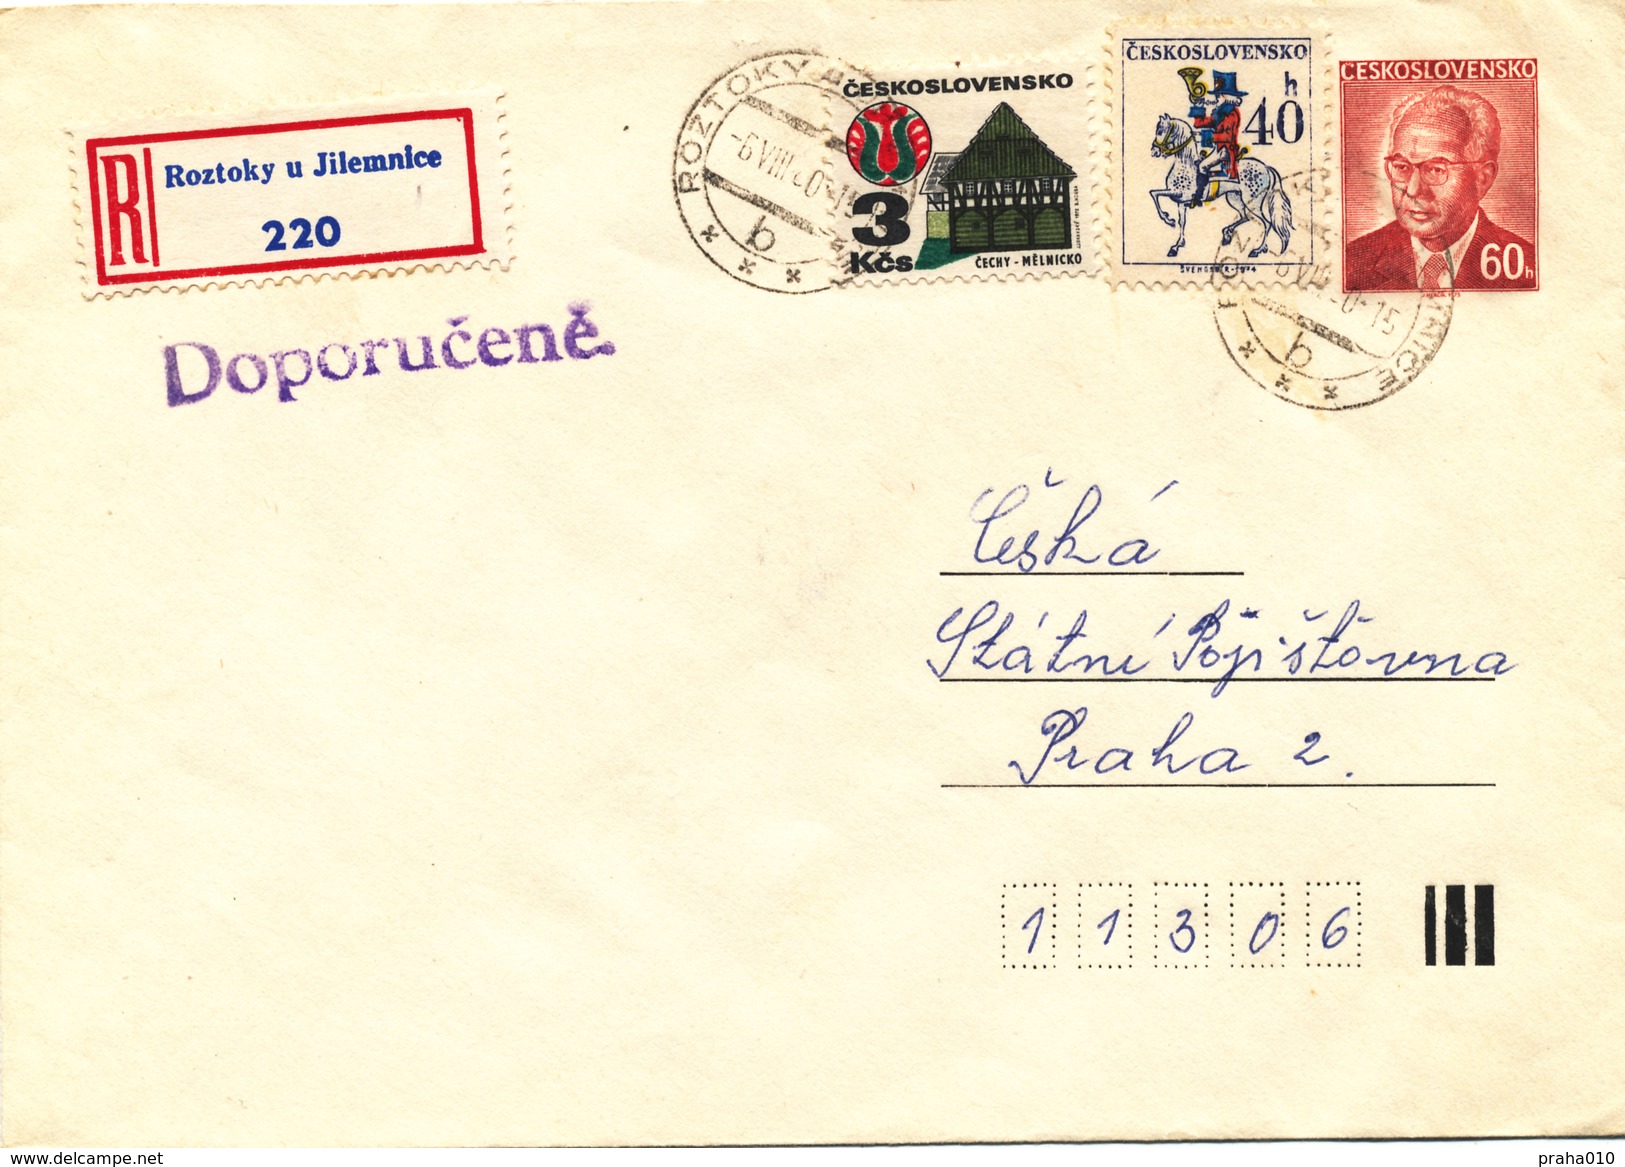 L3503 - Czechoslovakia (1980) Roztoky U Jilemnice (Postal Stationery) R-letter; Tariff: 4,00 Kcs - Covers